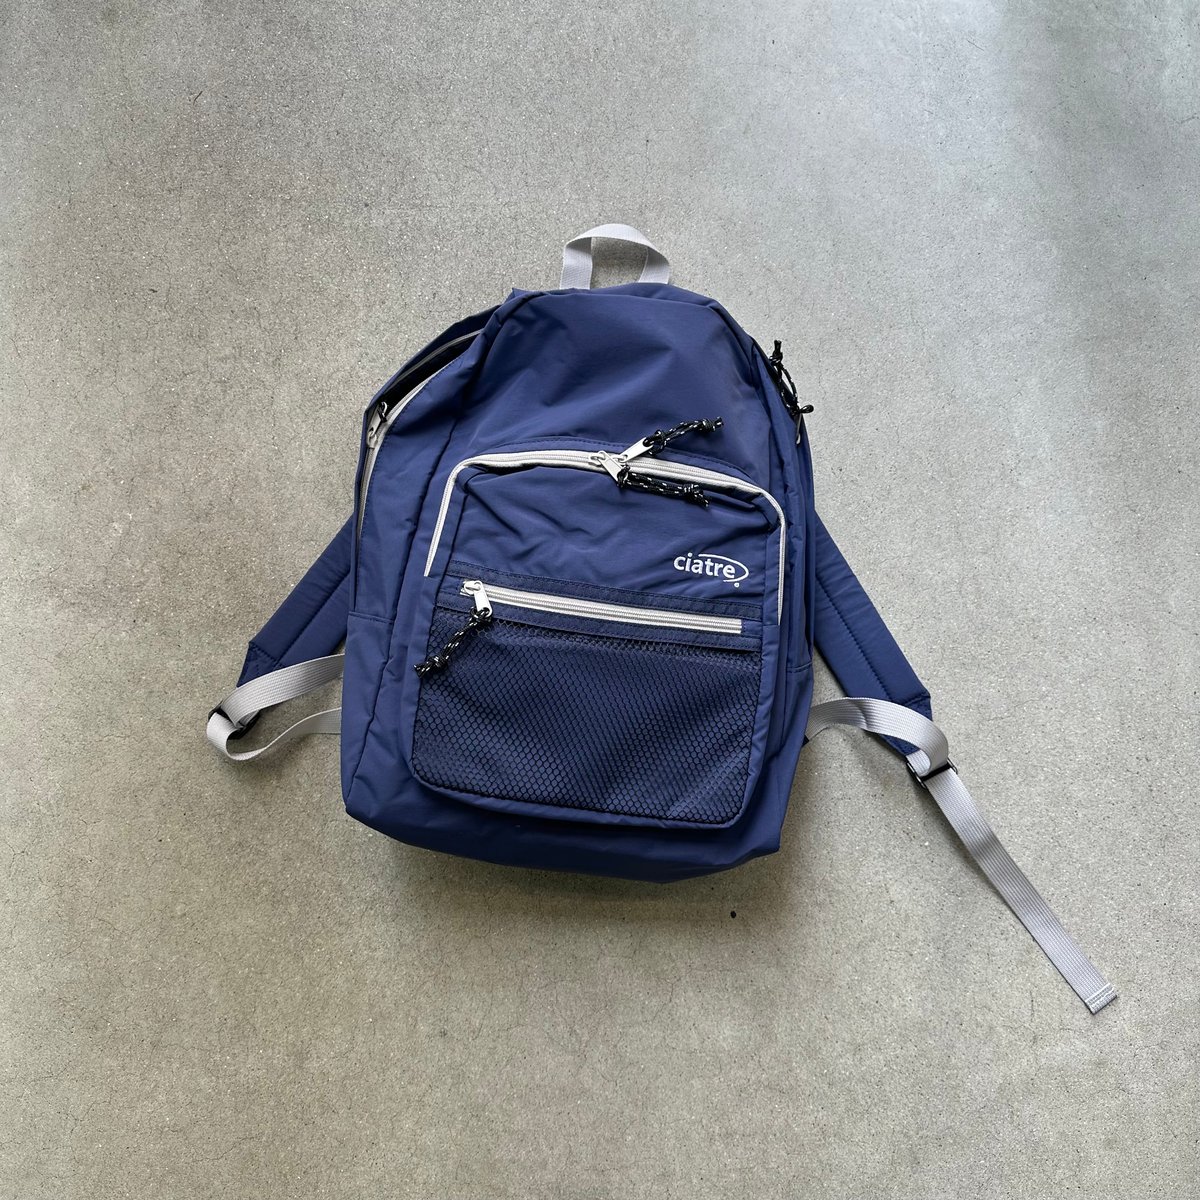 ciatre daytrip backpack | ciatre